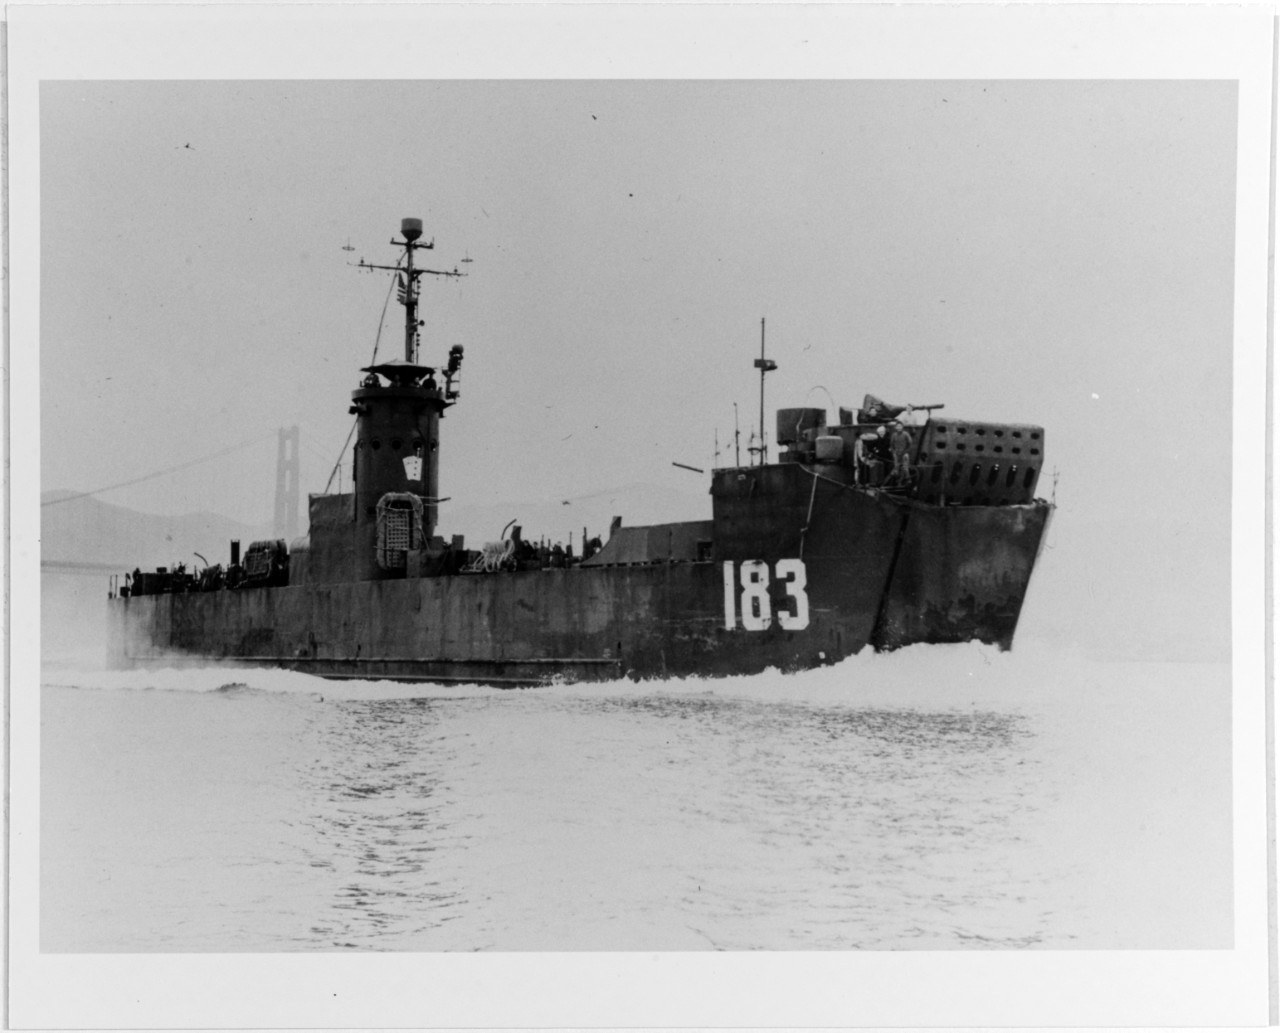 USS LSM-183